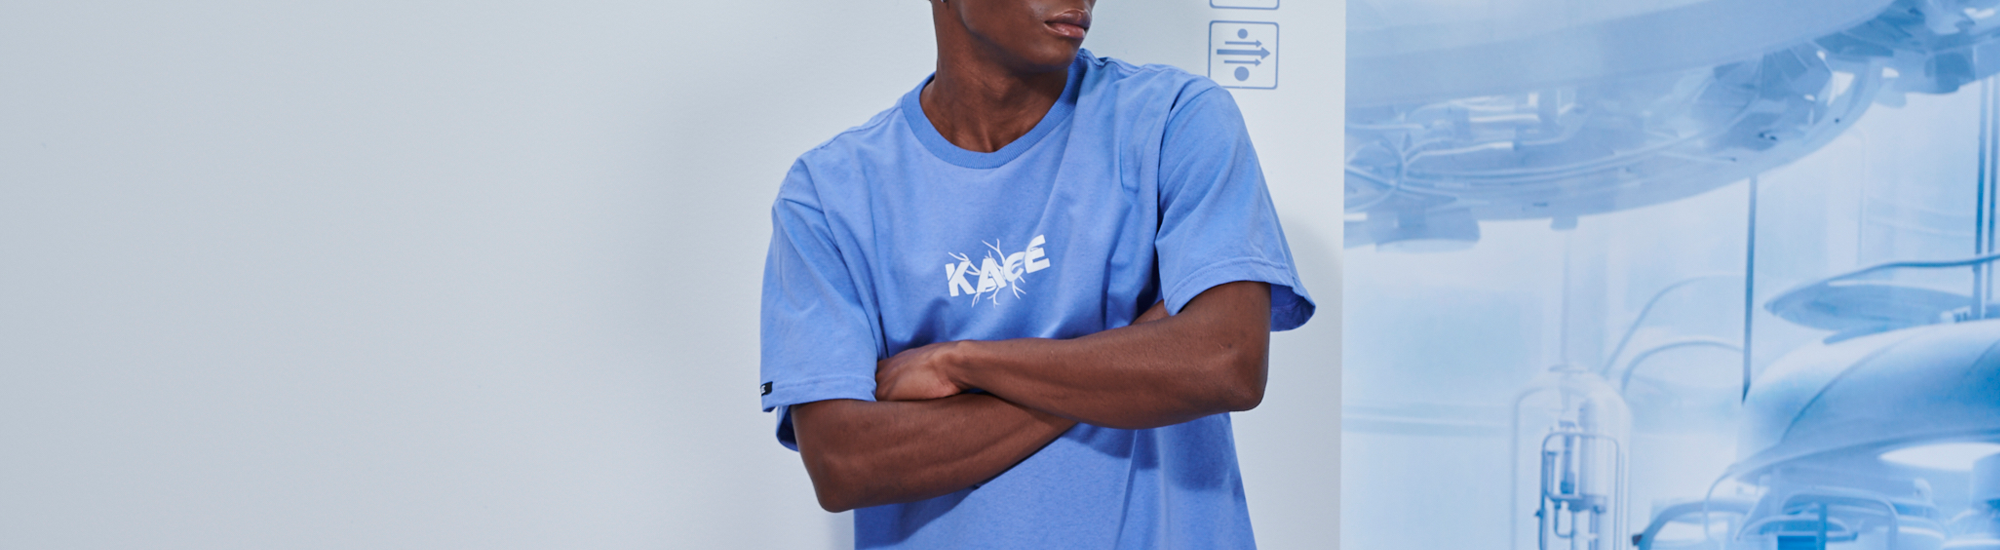 Imagem Camisetas Streetwear - Camisetas Street Wear Kace Wear Banner 2